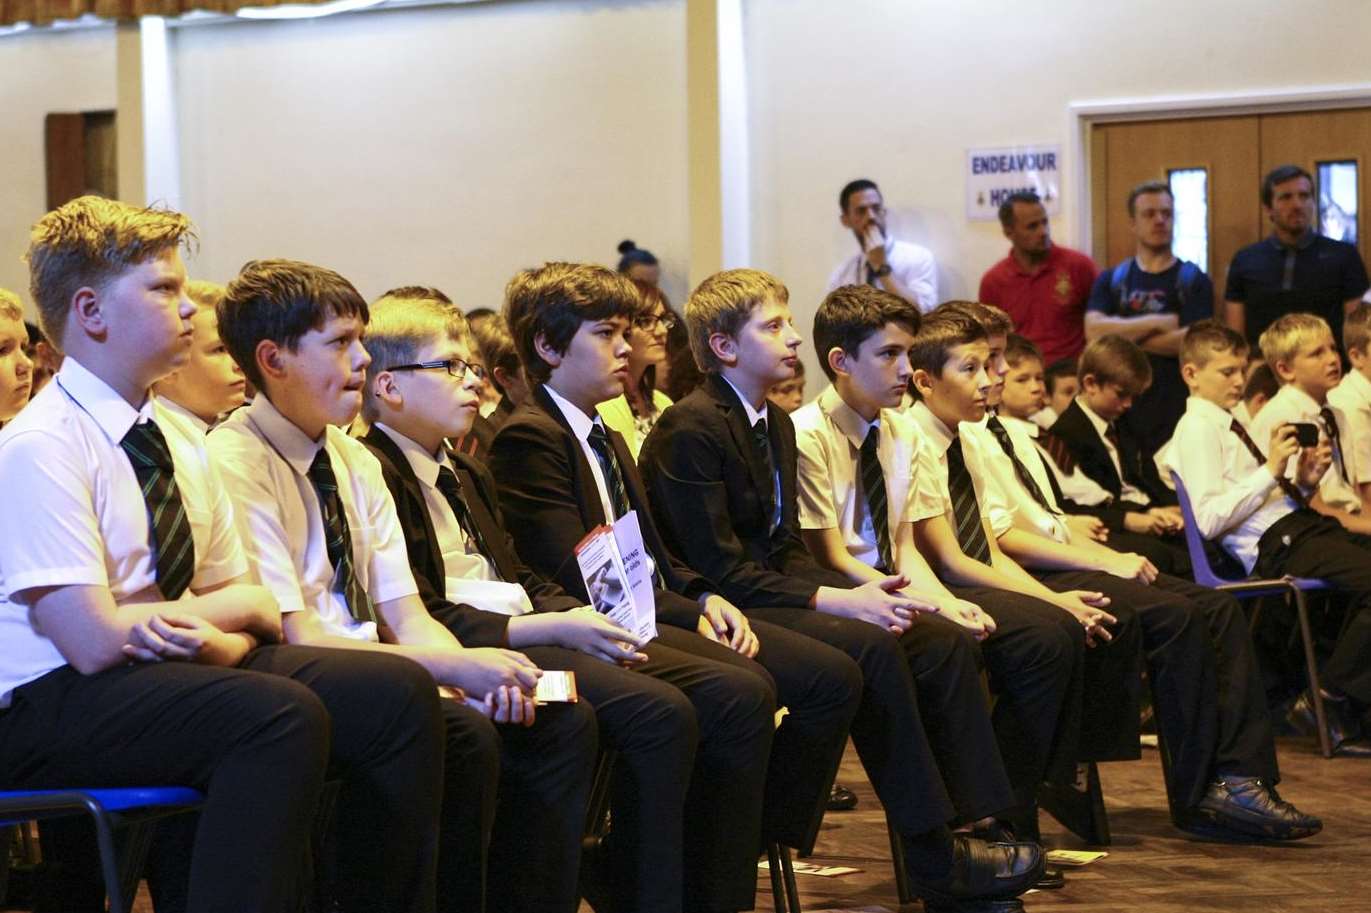 Students at the Harvey Grammar School watch Pixie Lott's exclusive performance.